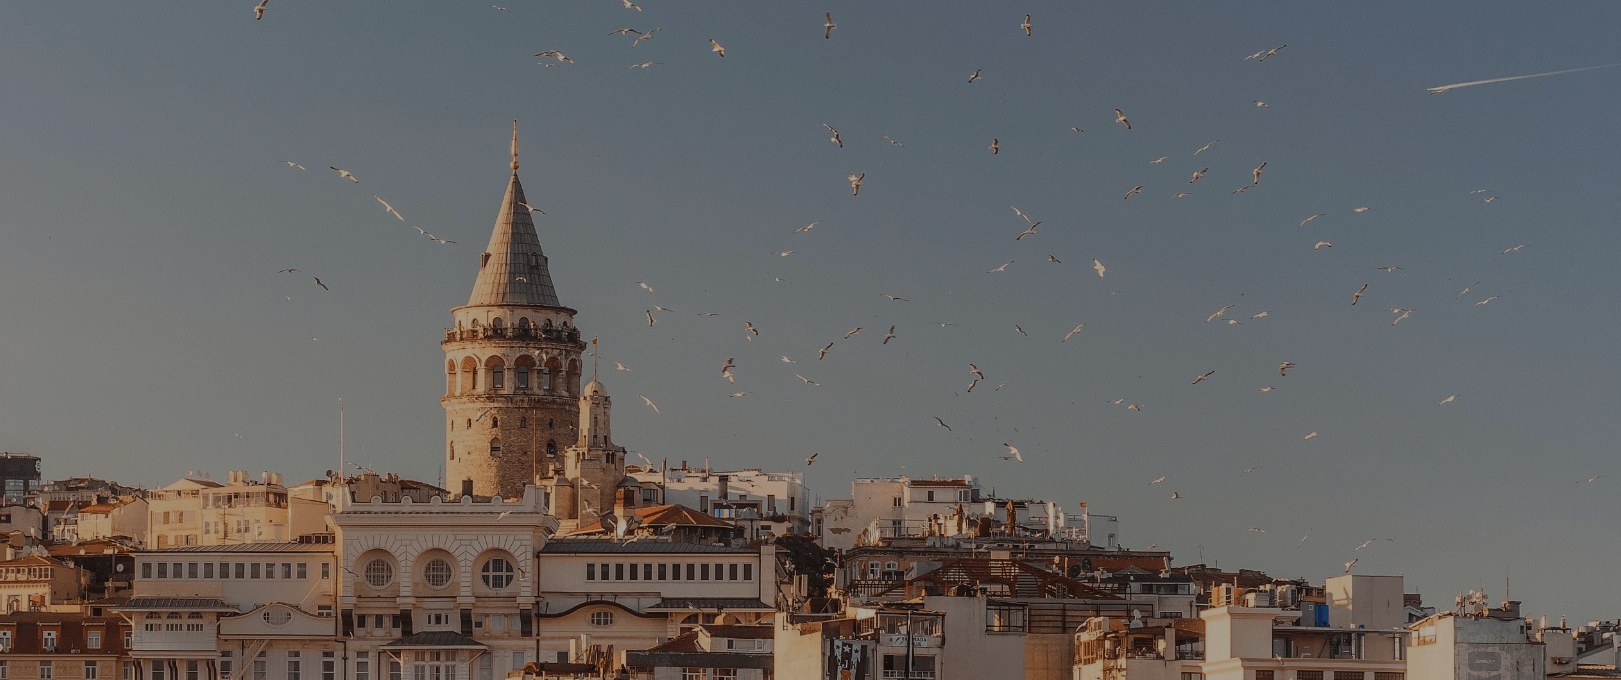 Istanbul Galata Tower scene